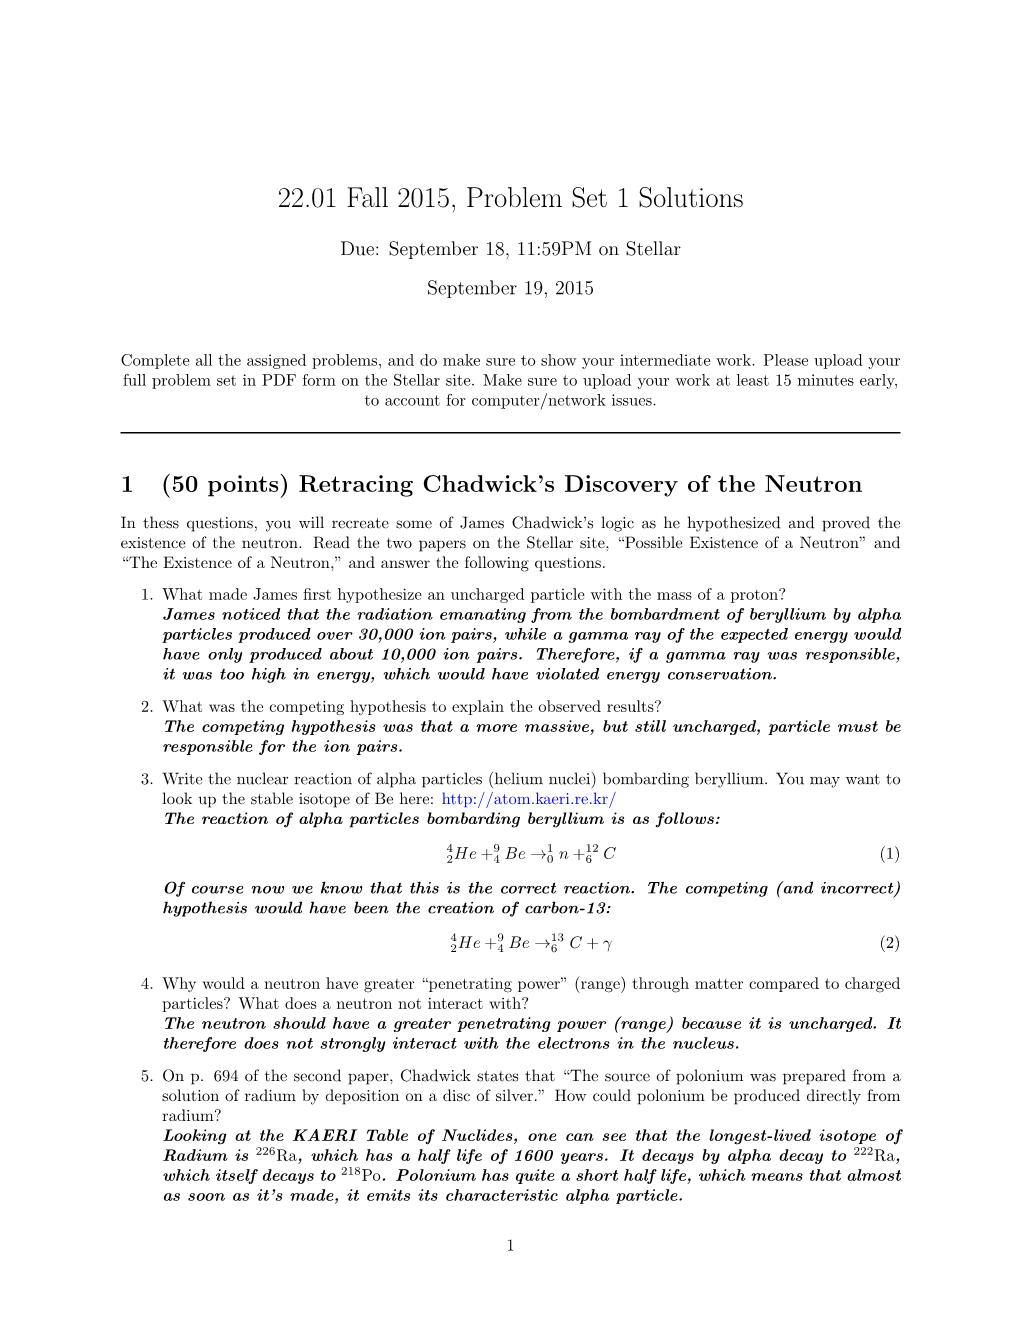 Problem Set 1 Solutions (PDF)